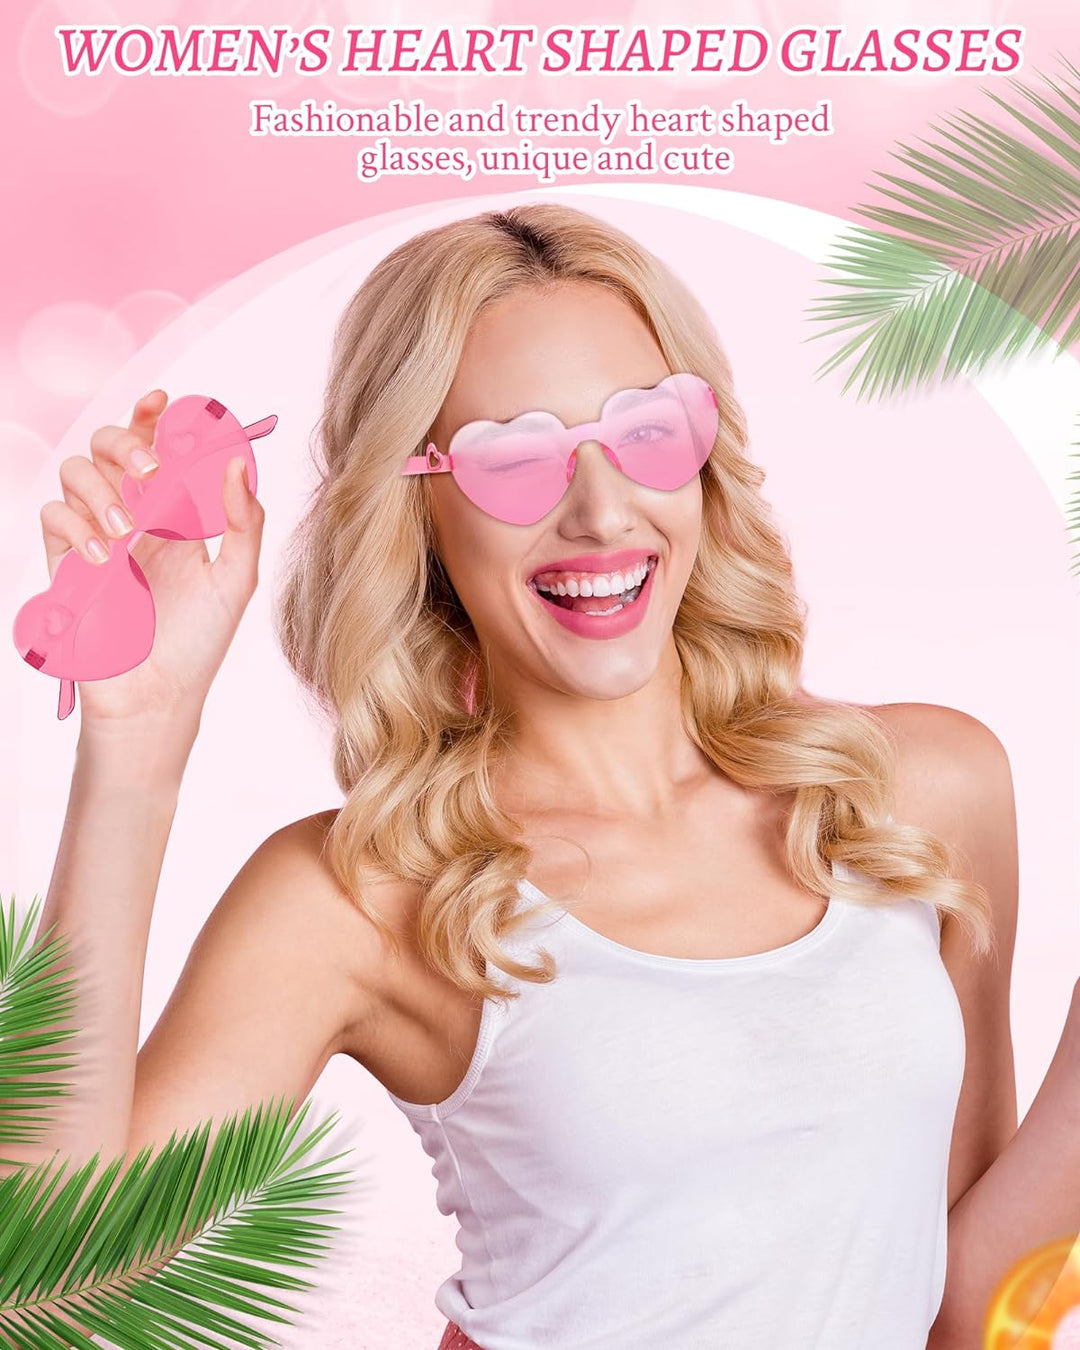 12PCS Heart Sunglasses Candy Color Heart Glasses for Women Heart Sun Glasses for Bachelorette Birthday Party